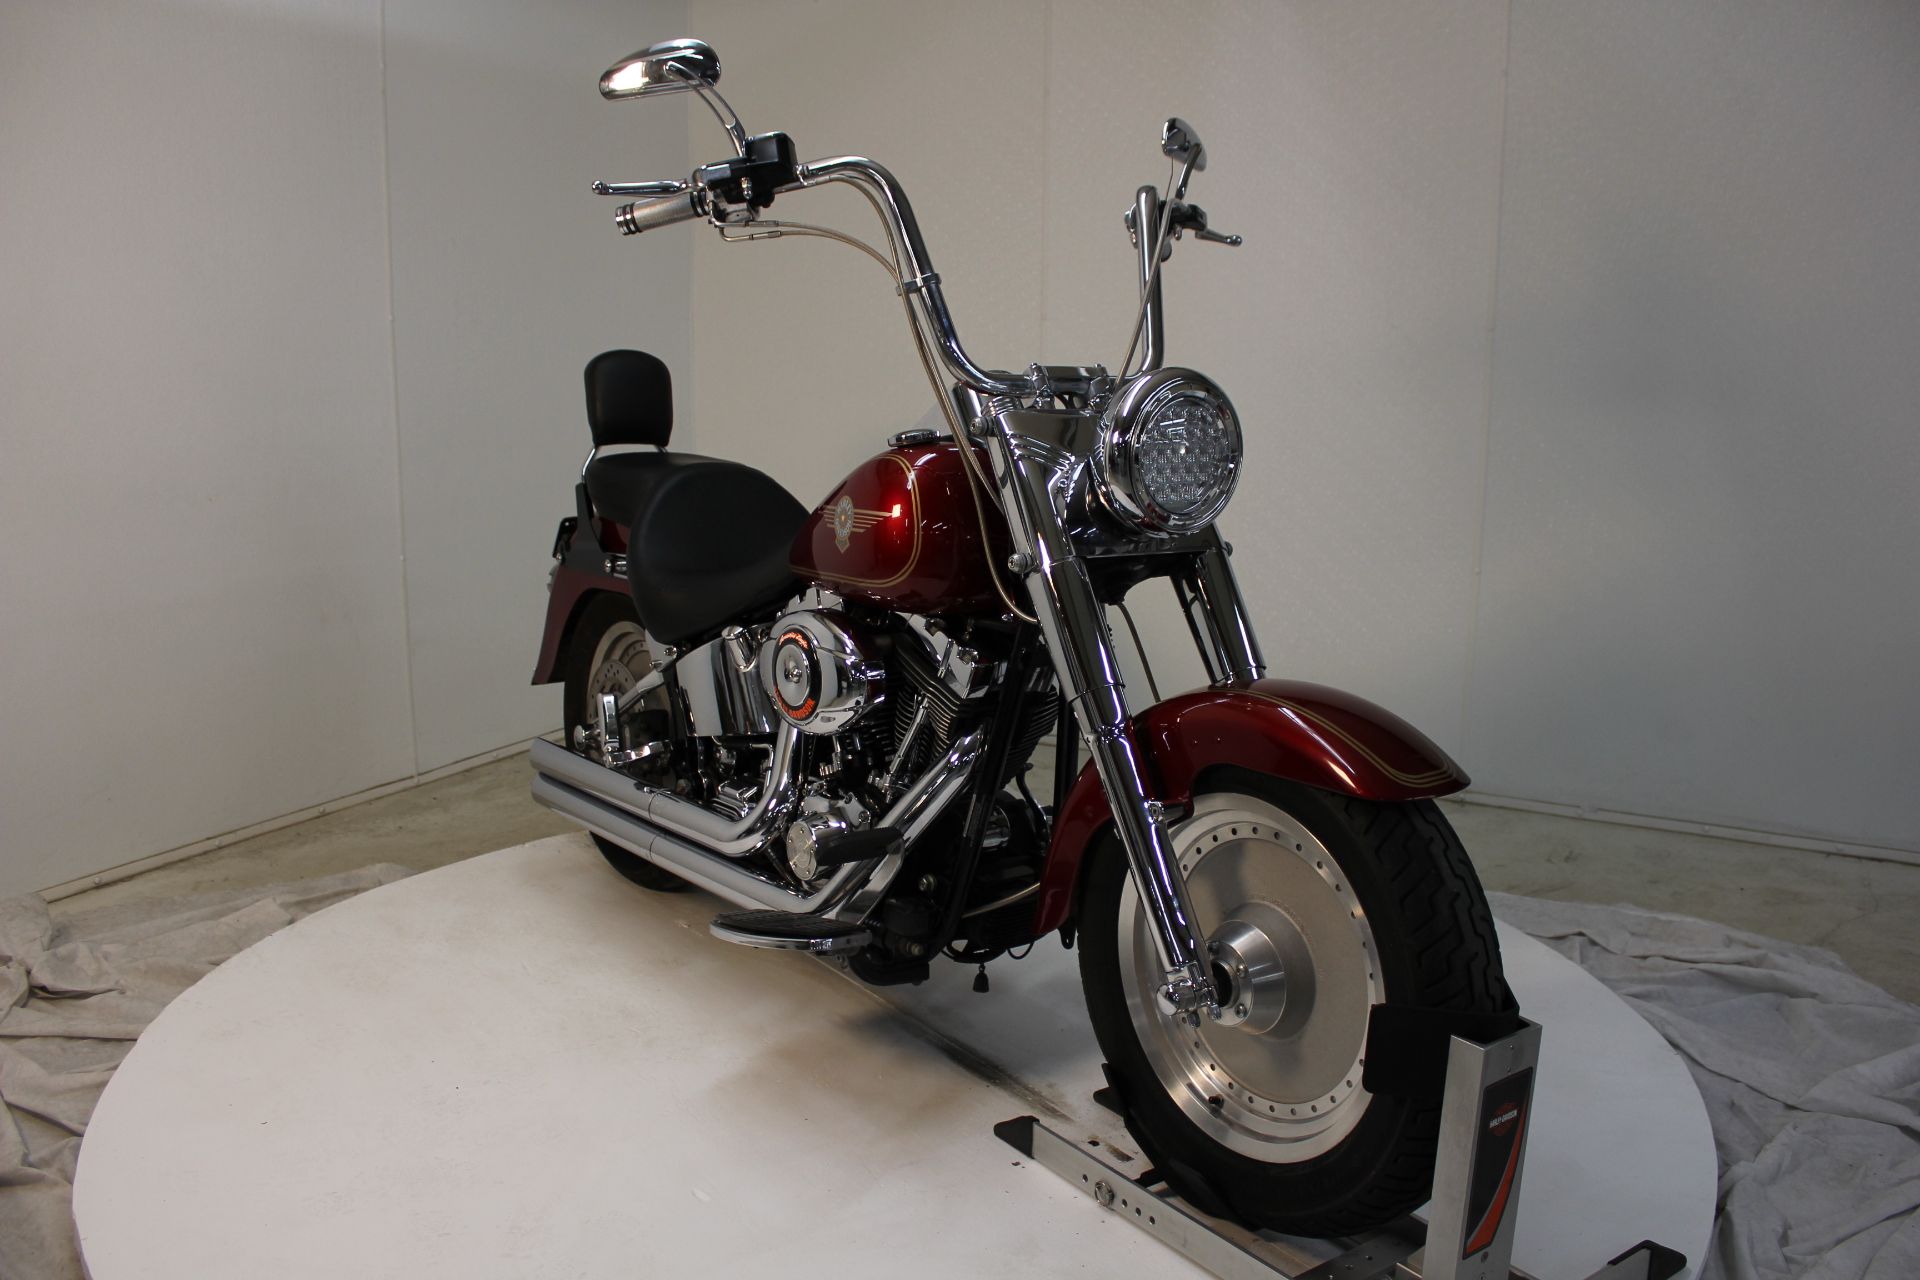 2005 Harley-Davidson FLSTFIAE Fat Boy® in Pittsfield, Massachusetts - Photo 6